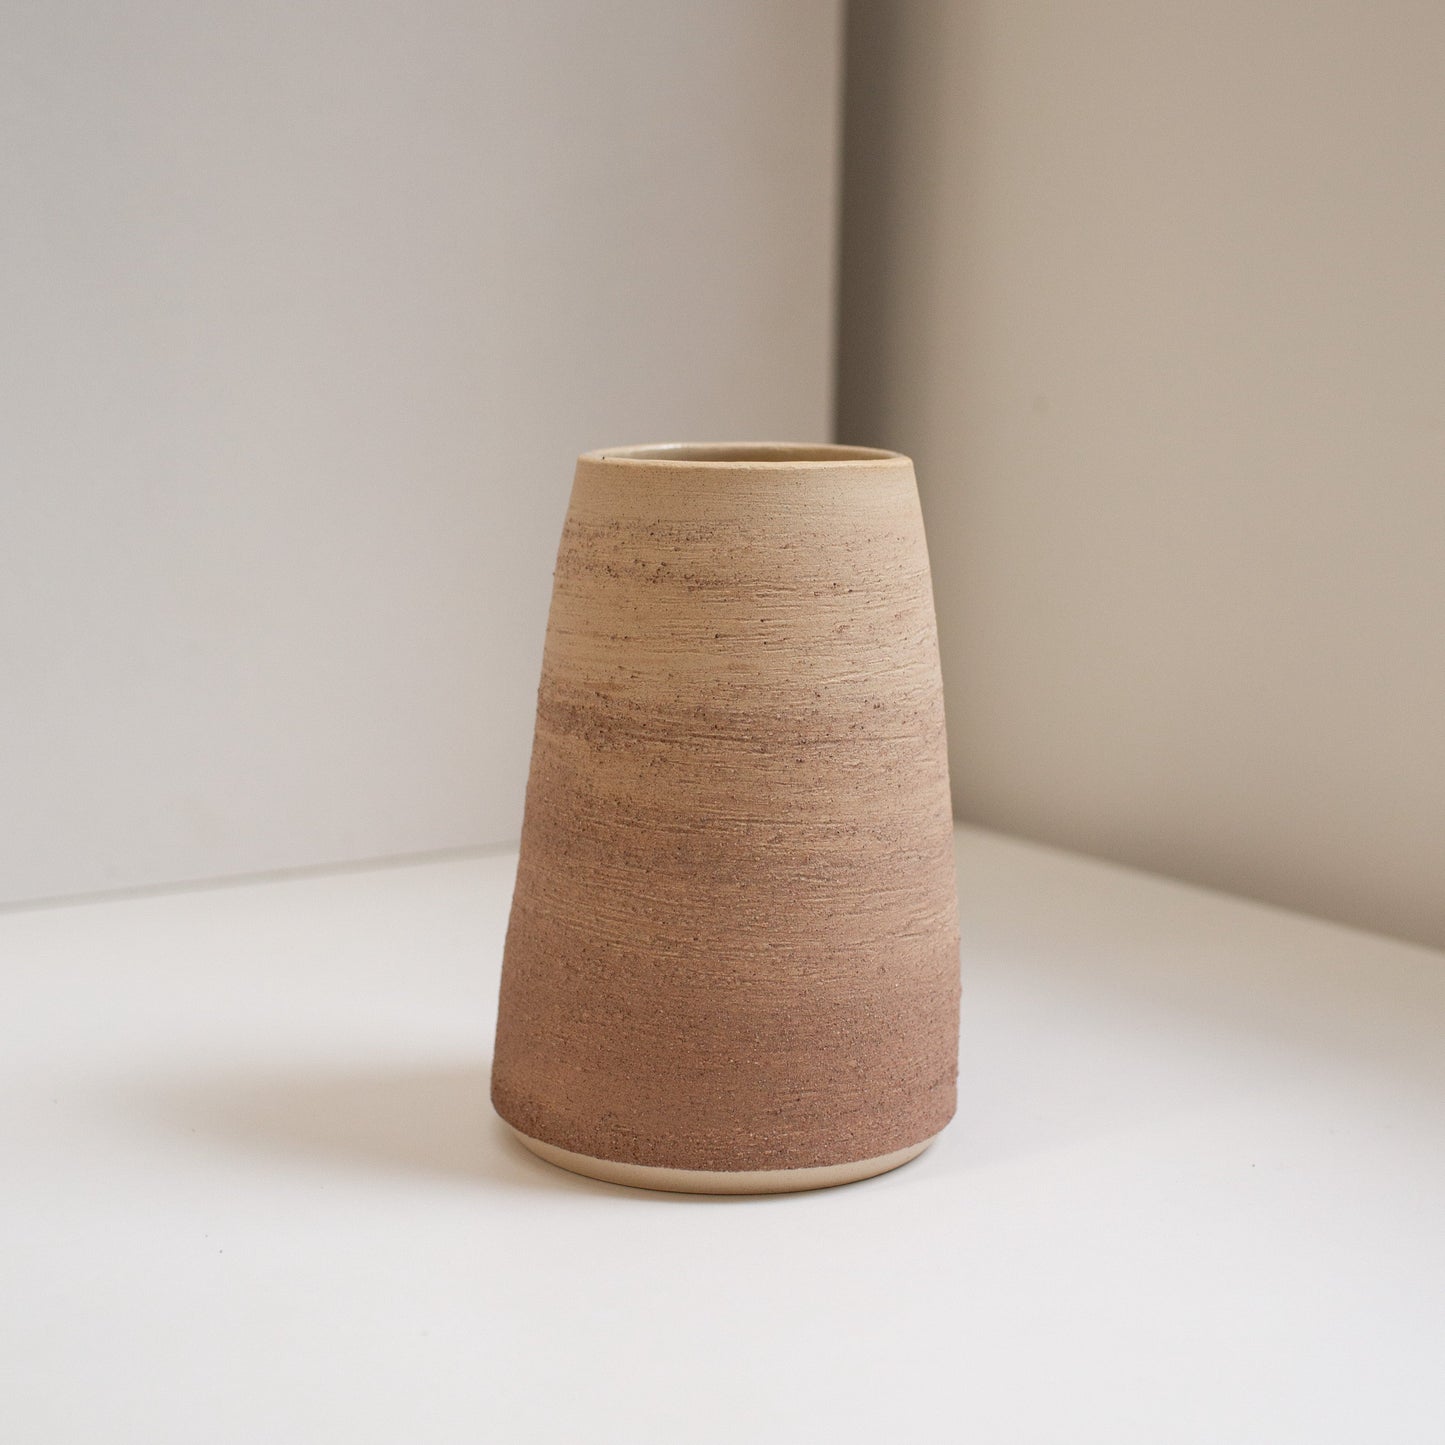 Muriwai Wild Clay Vase #6